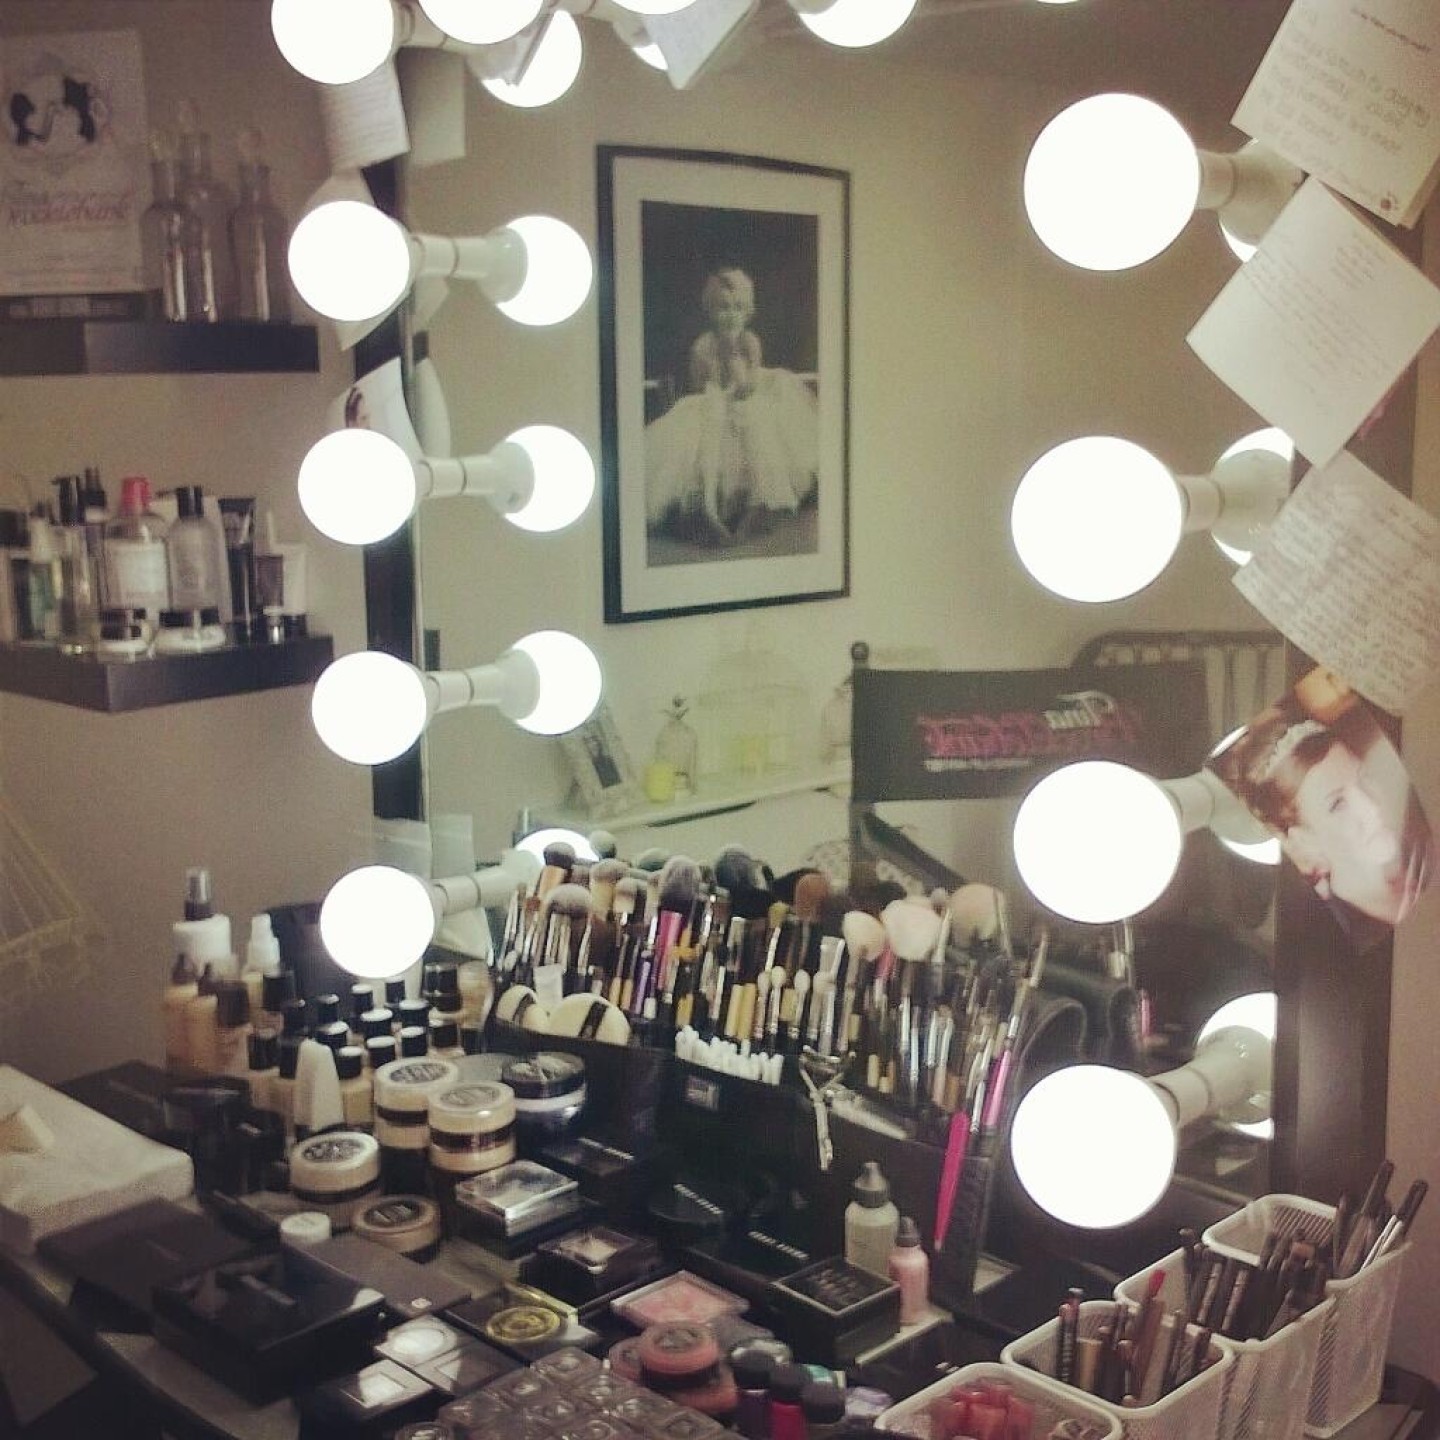 Tina's make-up studio